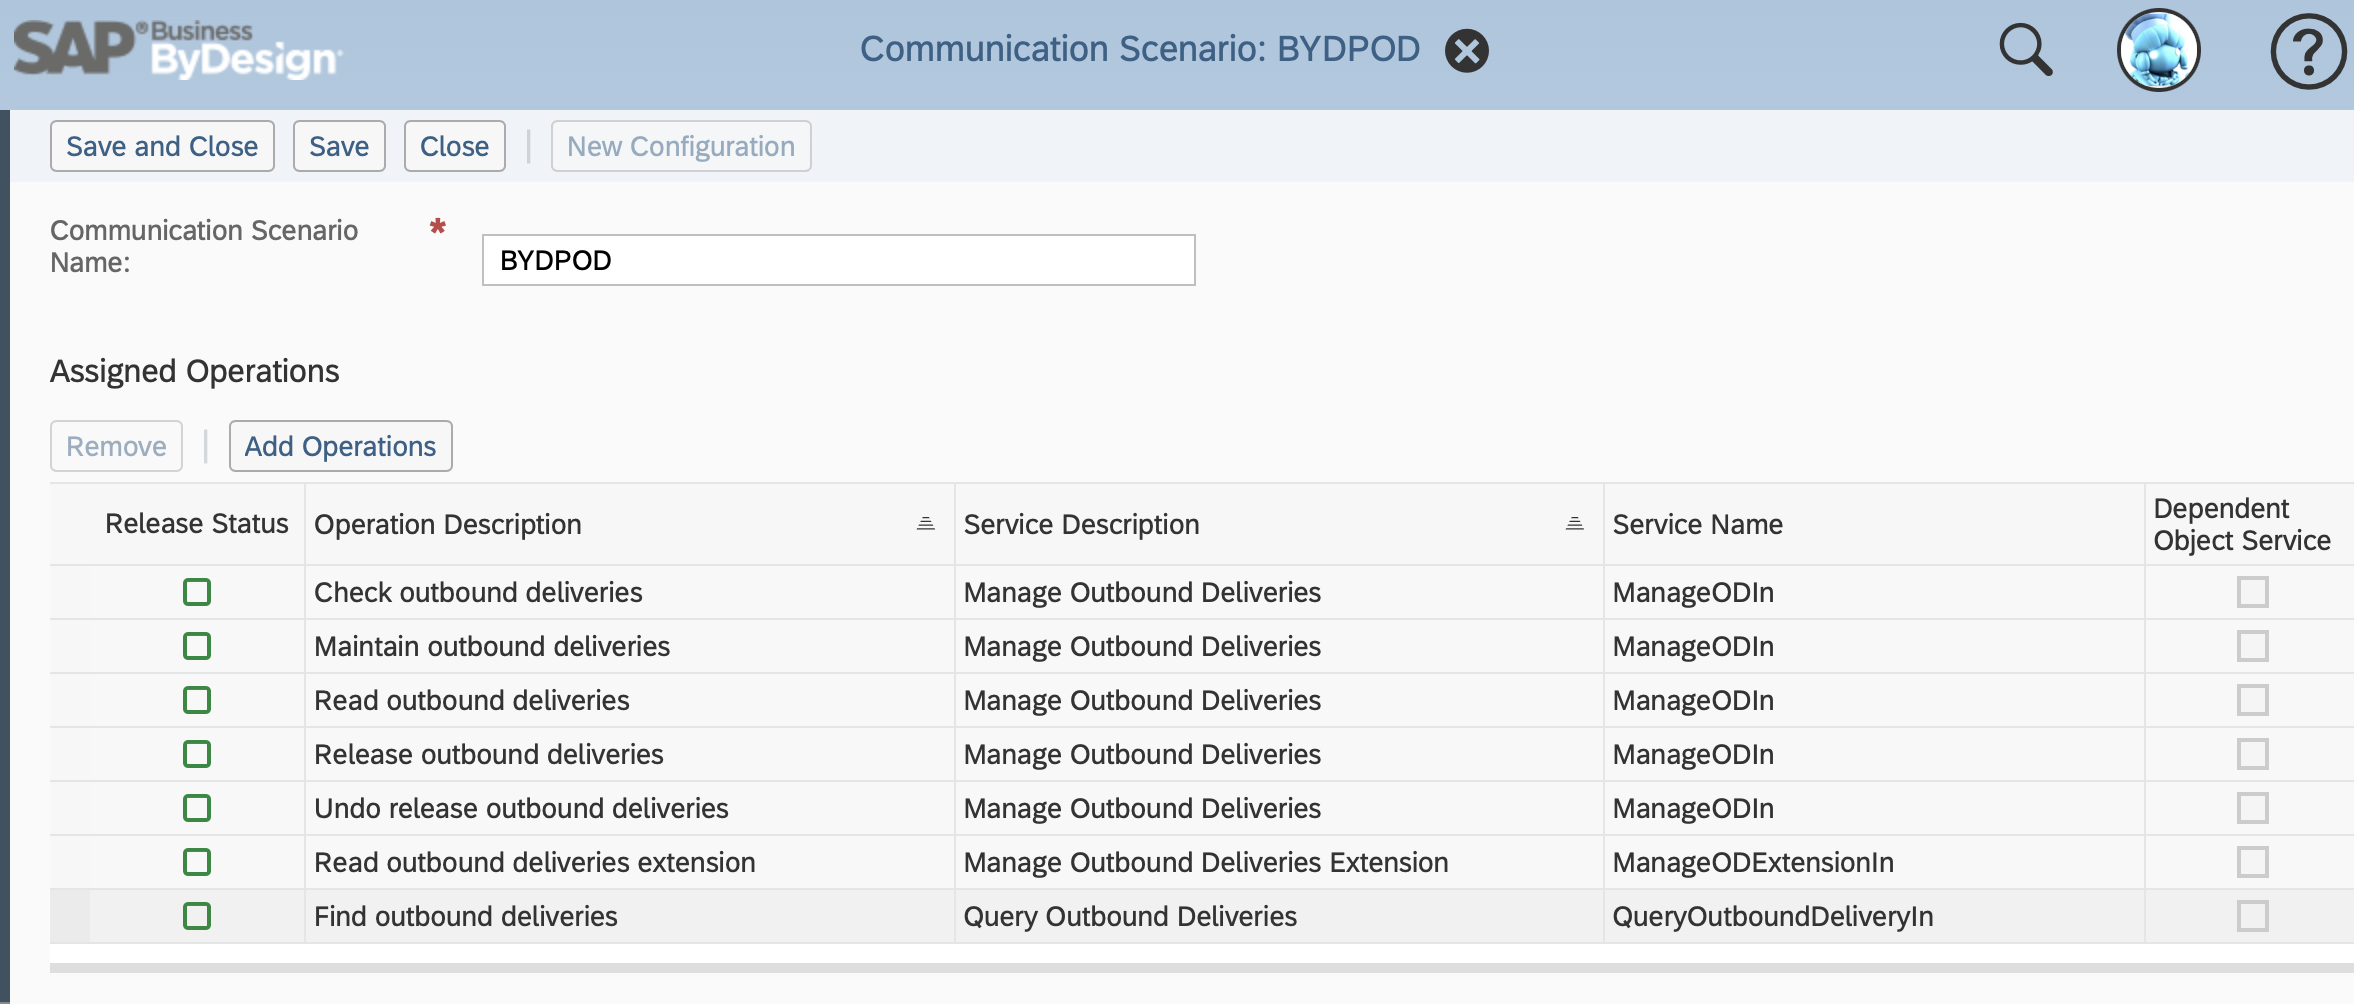 SAP Business ByDesign Communication Scenario #1